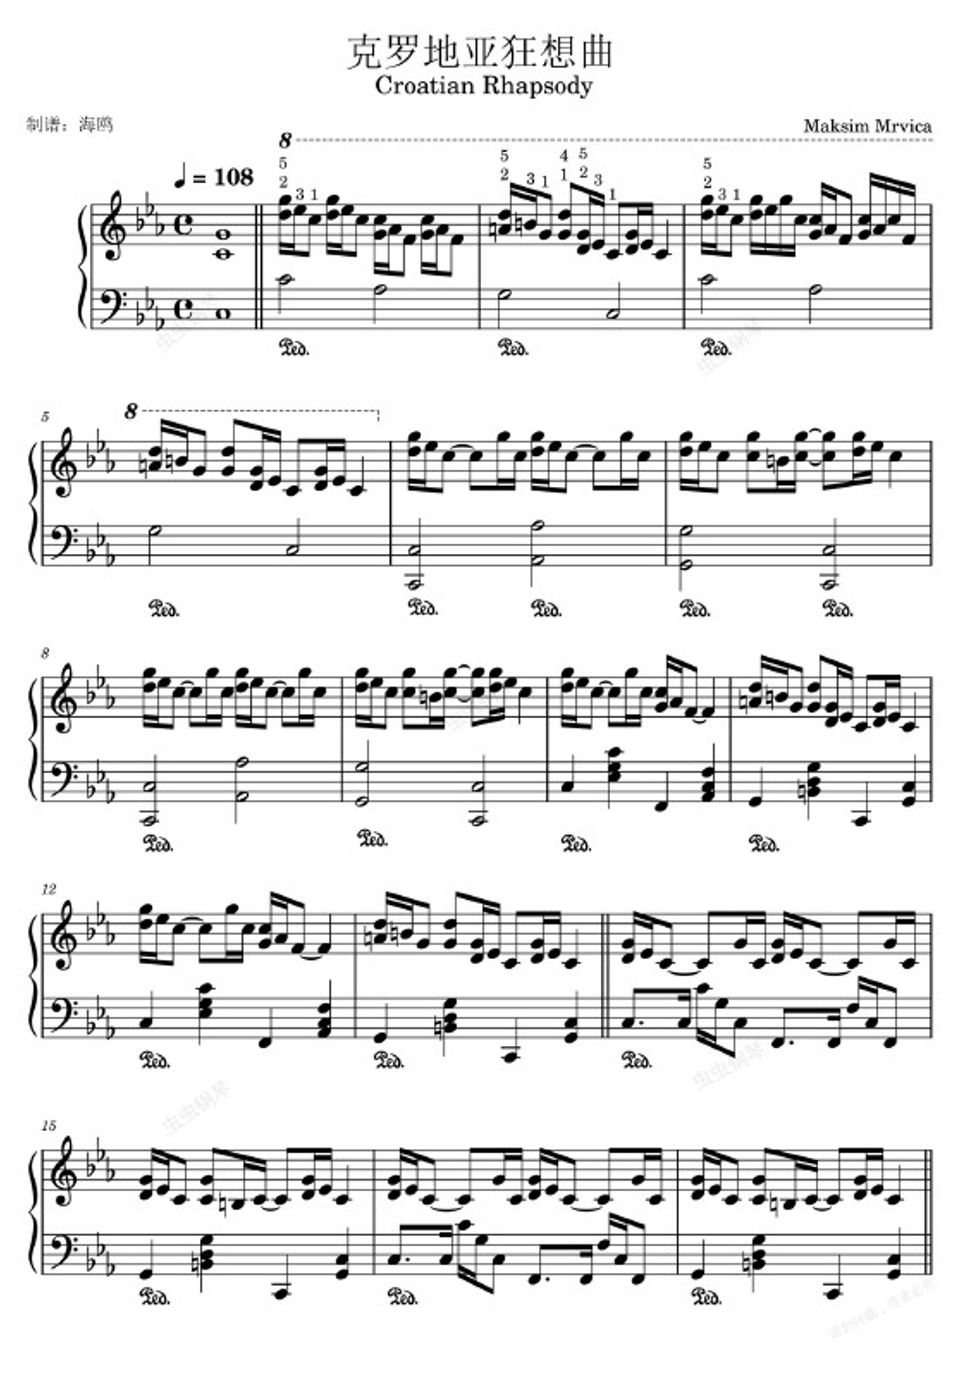 Maksim Mrvica - Maksim Mrvica《Croatian Rhapsody（克罗地亚狂想曲）》钢琴谱 by wangyunan